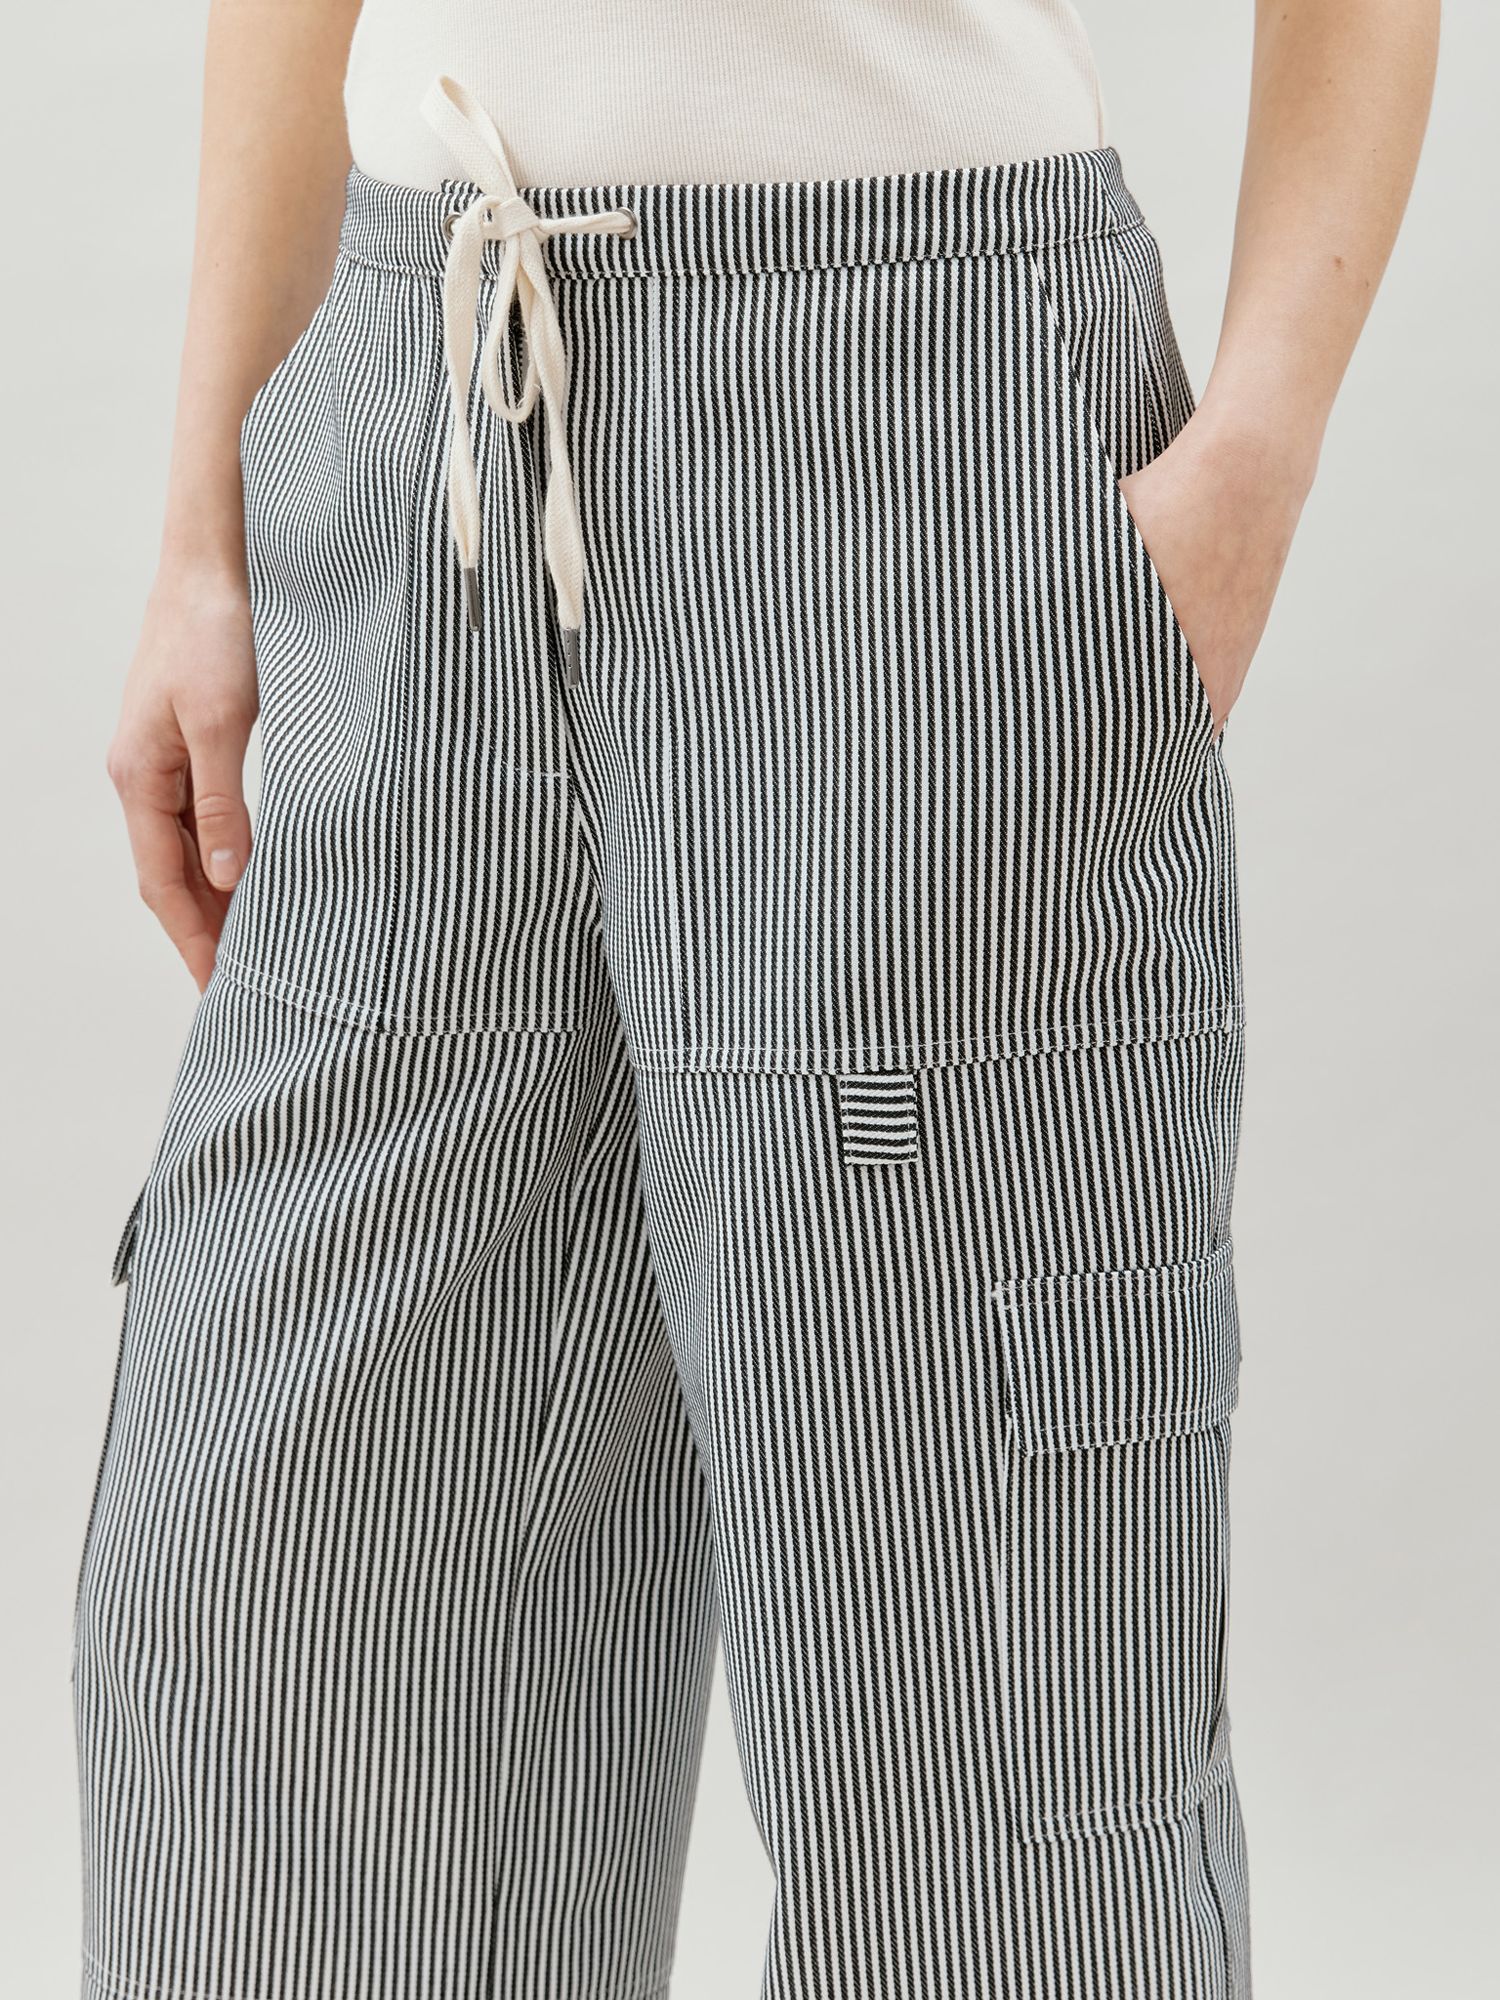 Albaray Ticking Stripe Drawstring Cargo Trousers, Black/White, 14